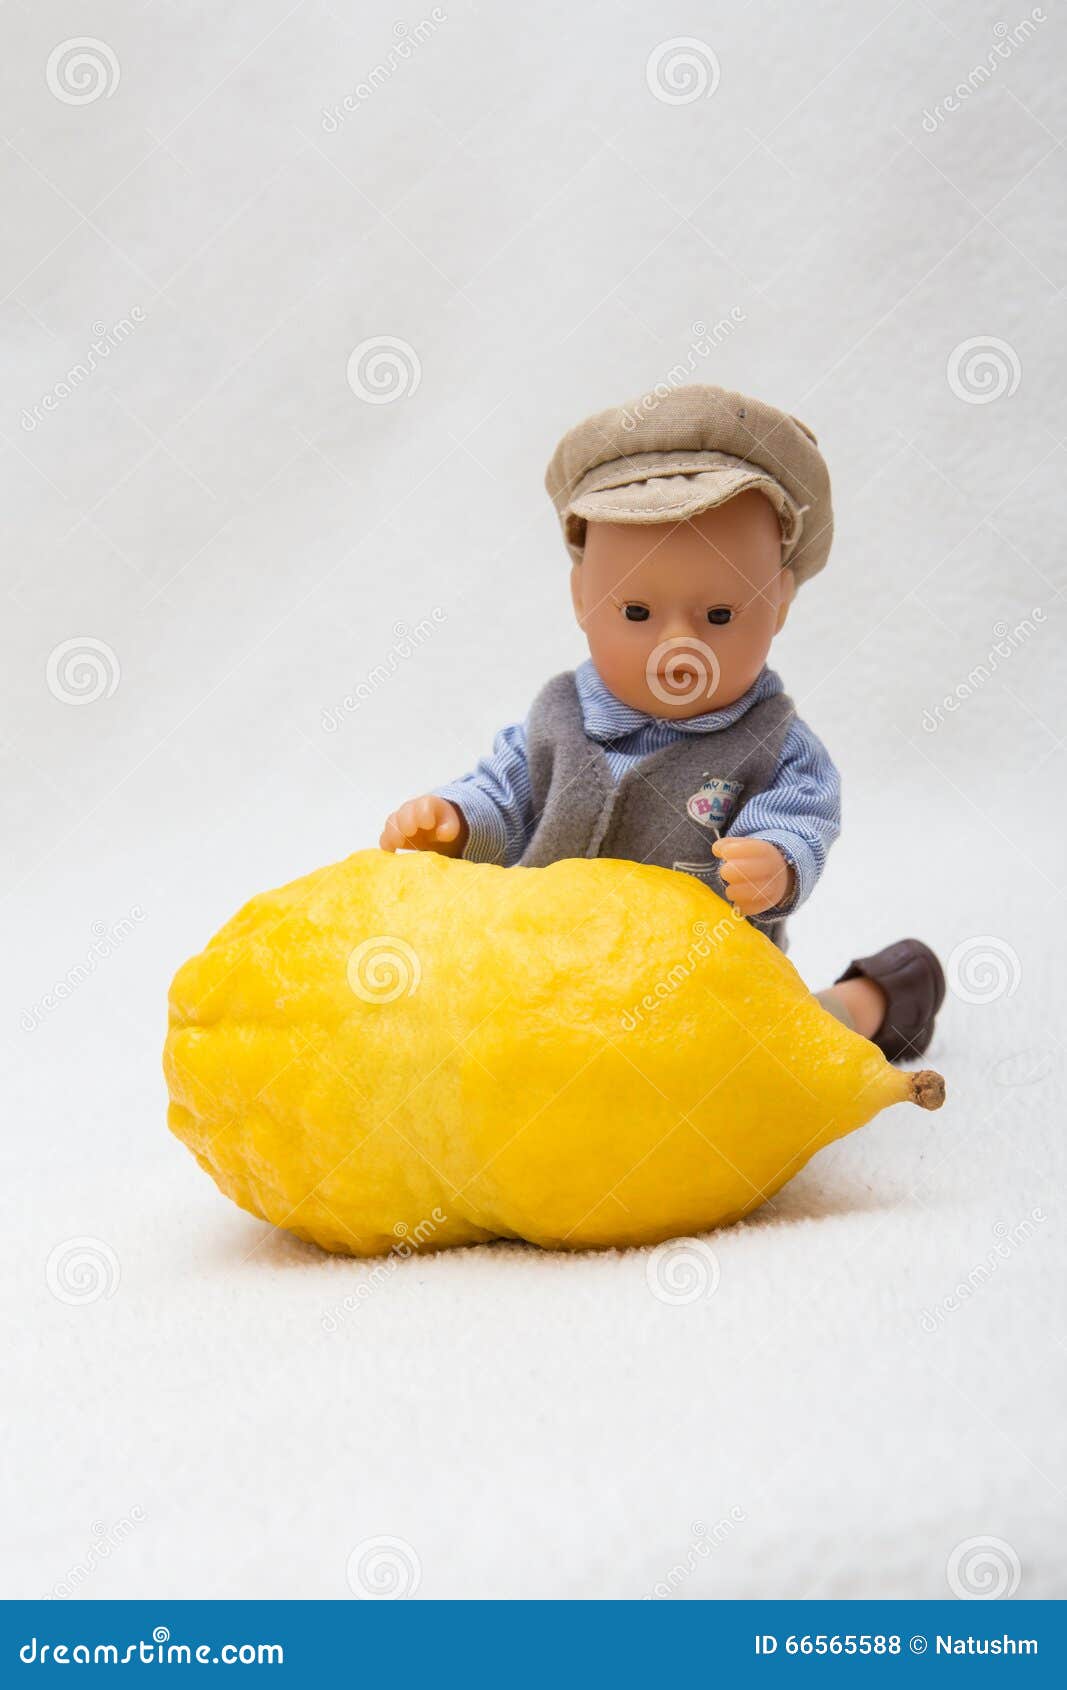 citron - etrog with doll child